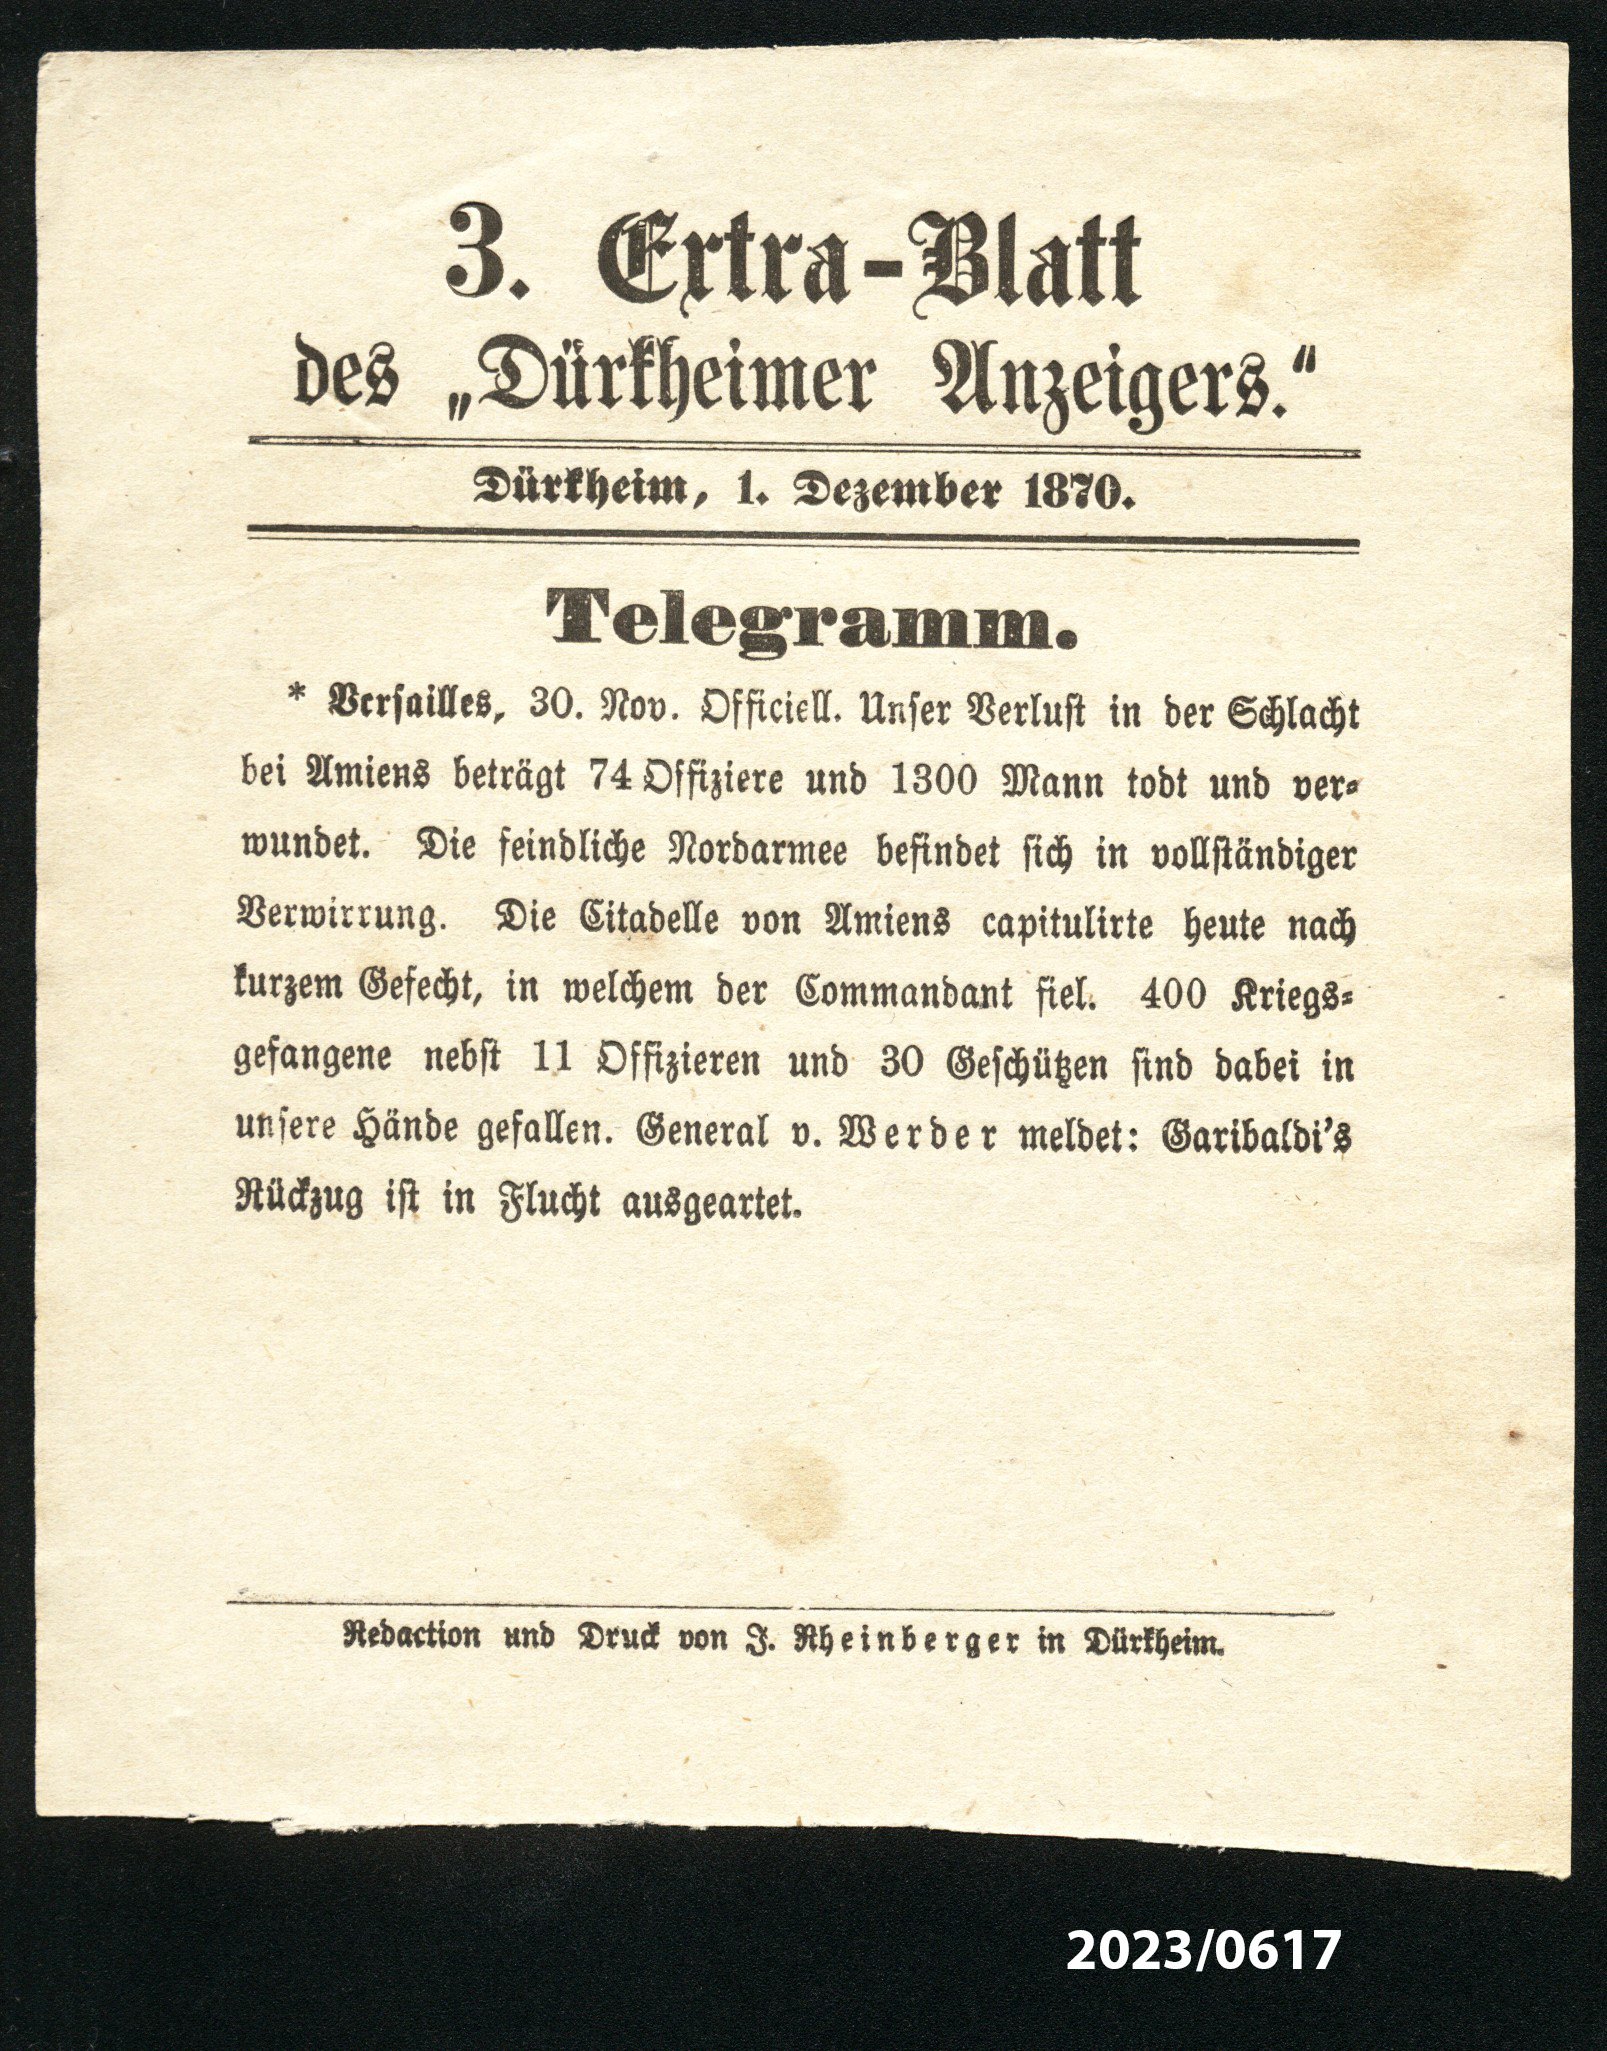 3. Extra-Blatt des "Dürkheimer Anzeigers" 1.12.1870 (Stadtmuseum Bad Dürkheim im Kulturzentrum Haus Catoir CC BY-NC-SA)